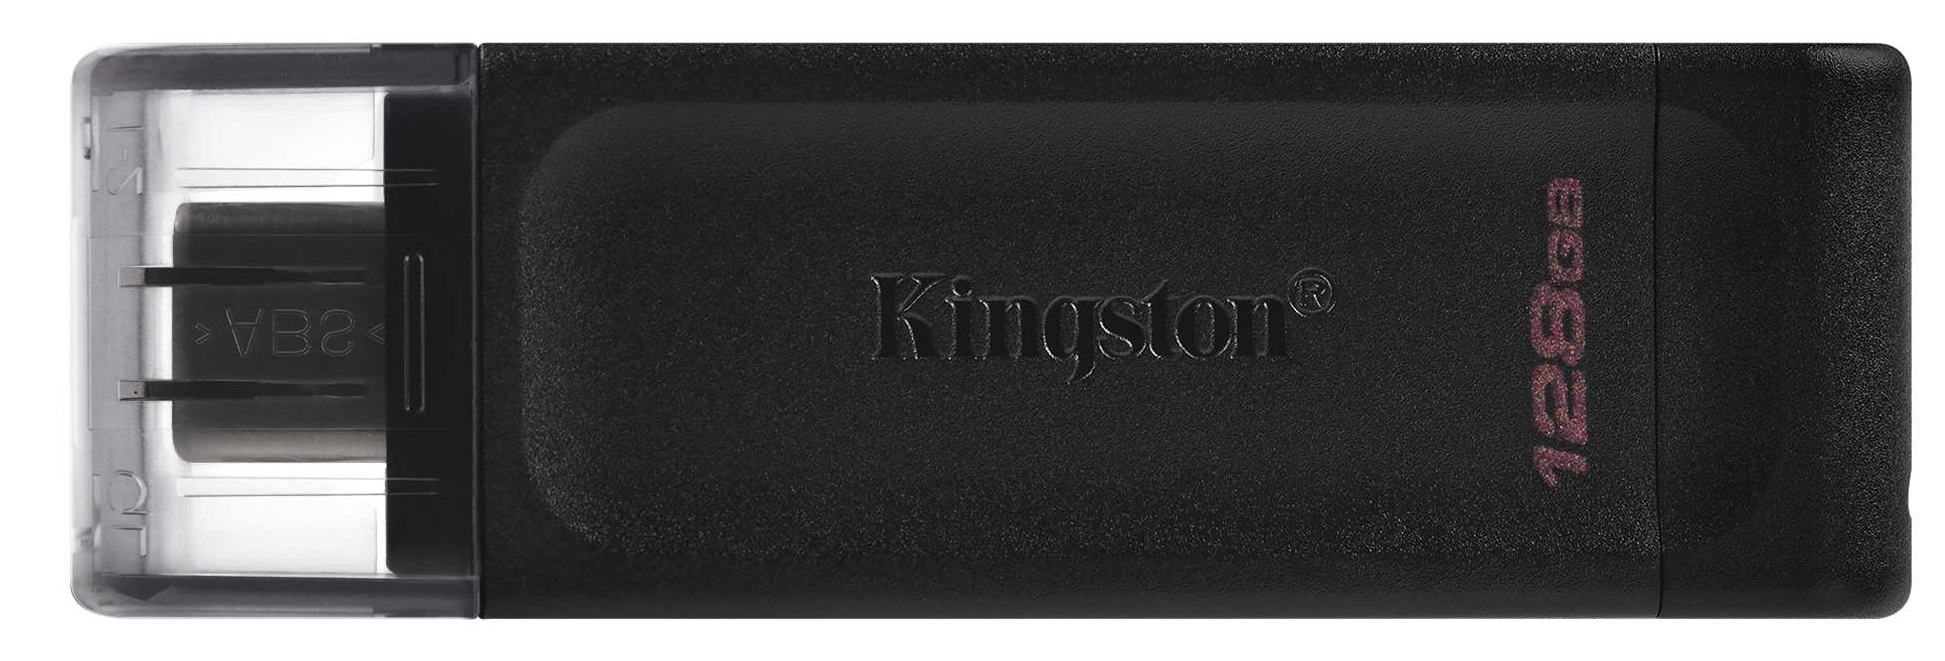 USB-накопитель 128GB KINGSTON DataTraveler 70 Type-C USB 3.2 (DT70/128GB) в Киеве